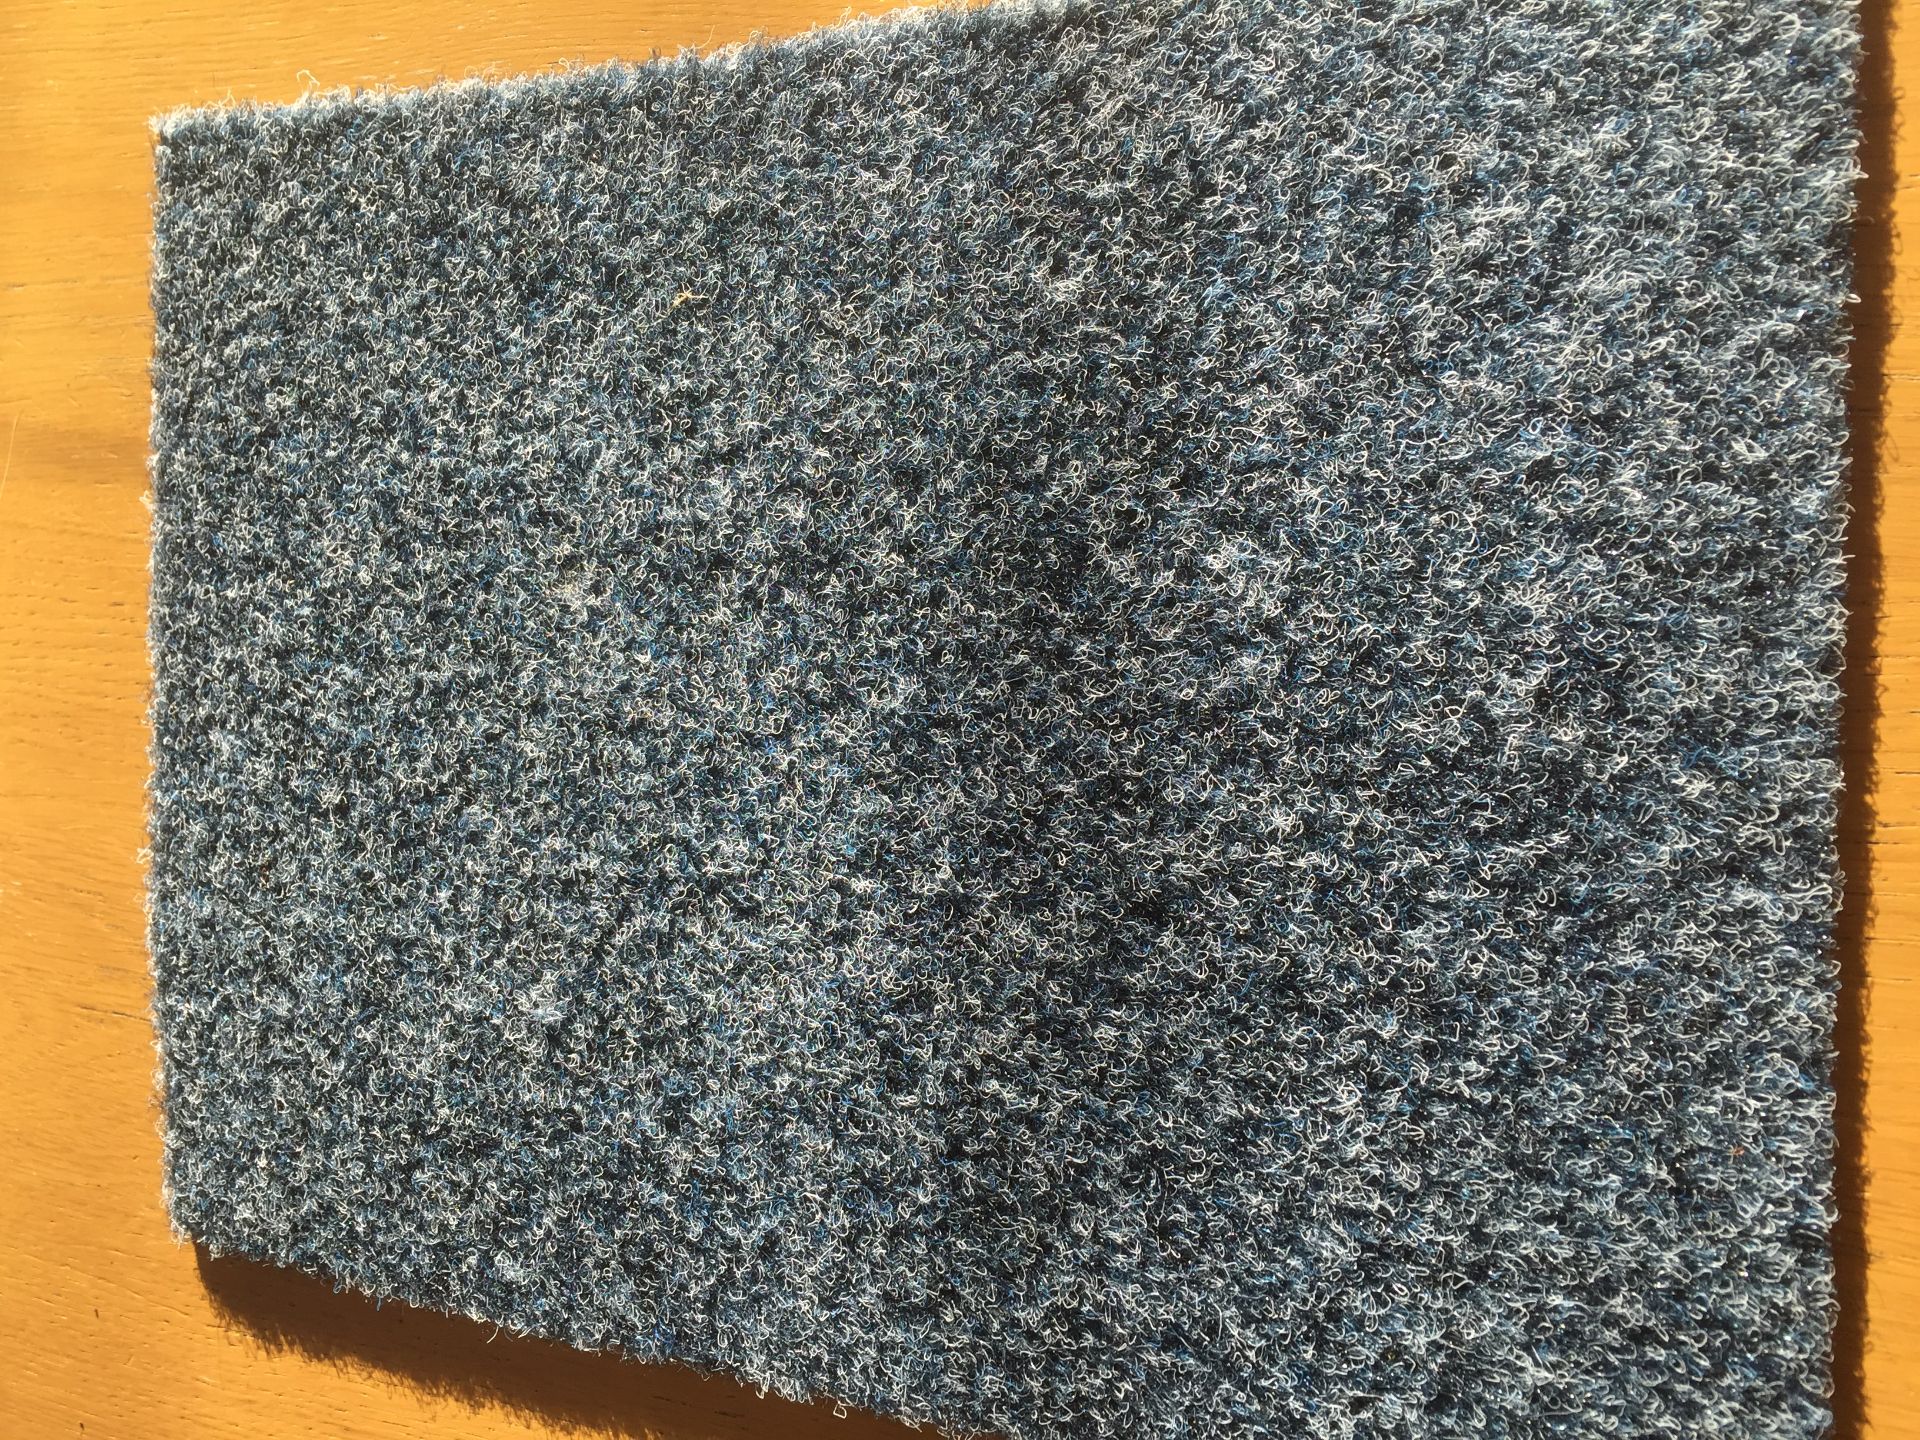 Burmatex Velour Excel - Sky Dancer  Tough, durable fibre bonded thick carpet tiles perfectly